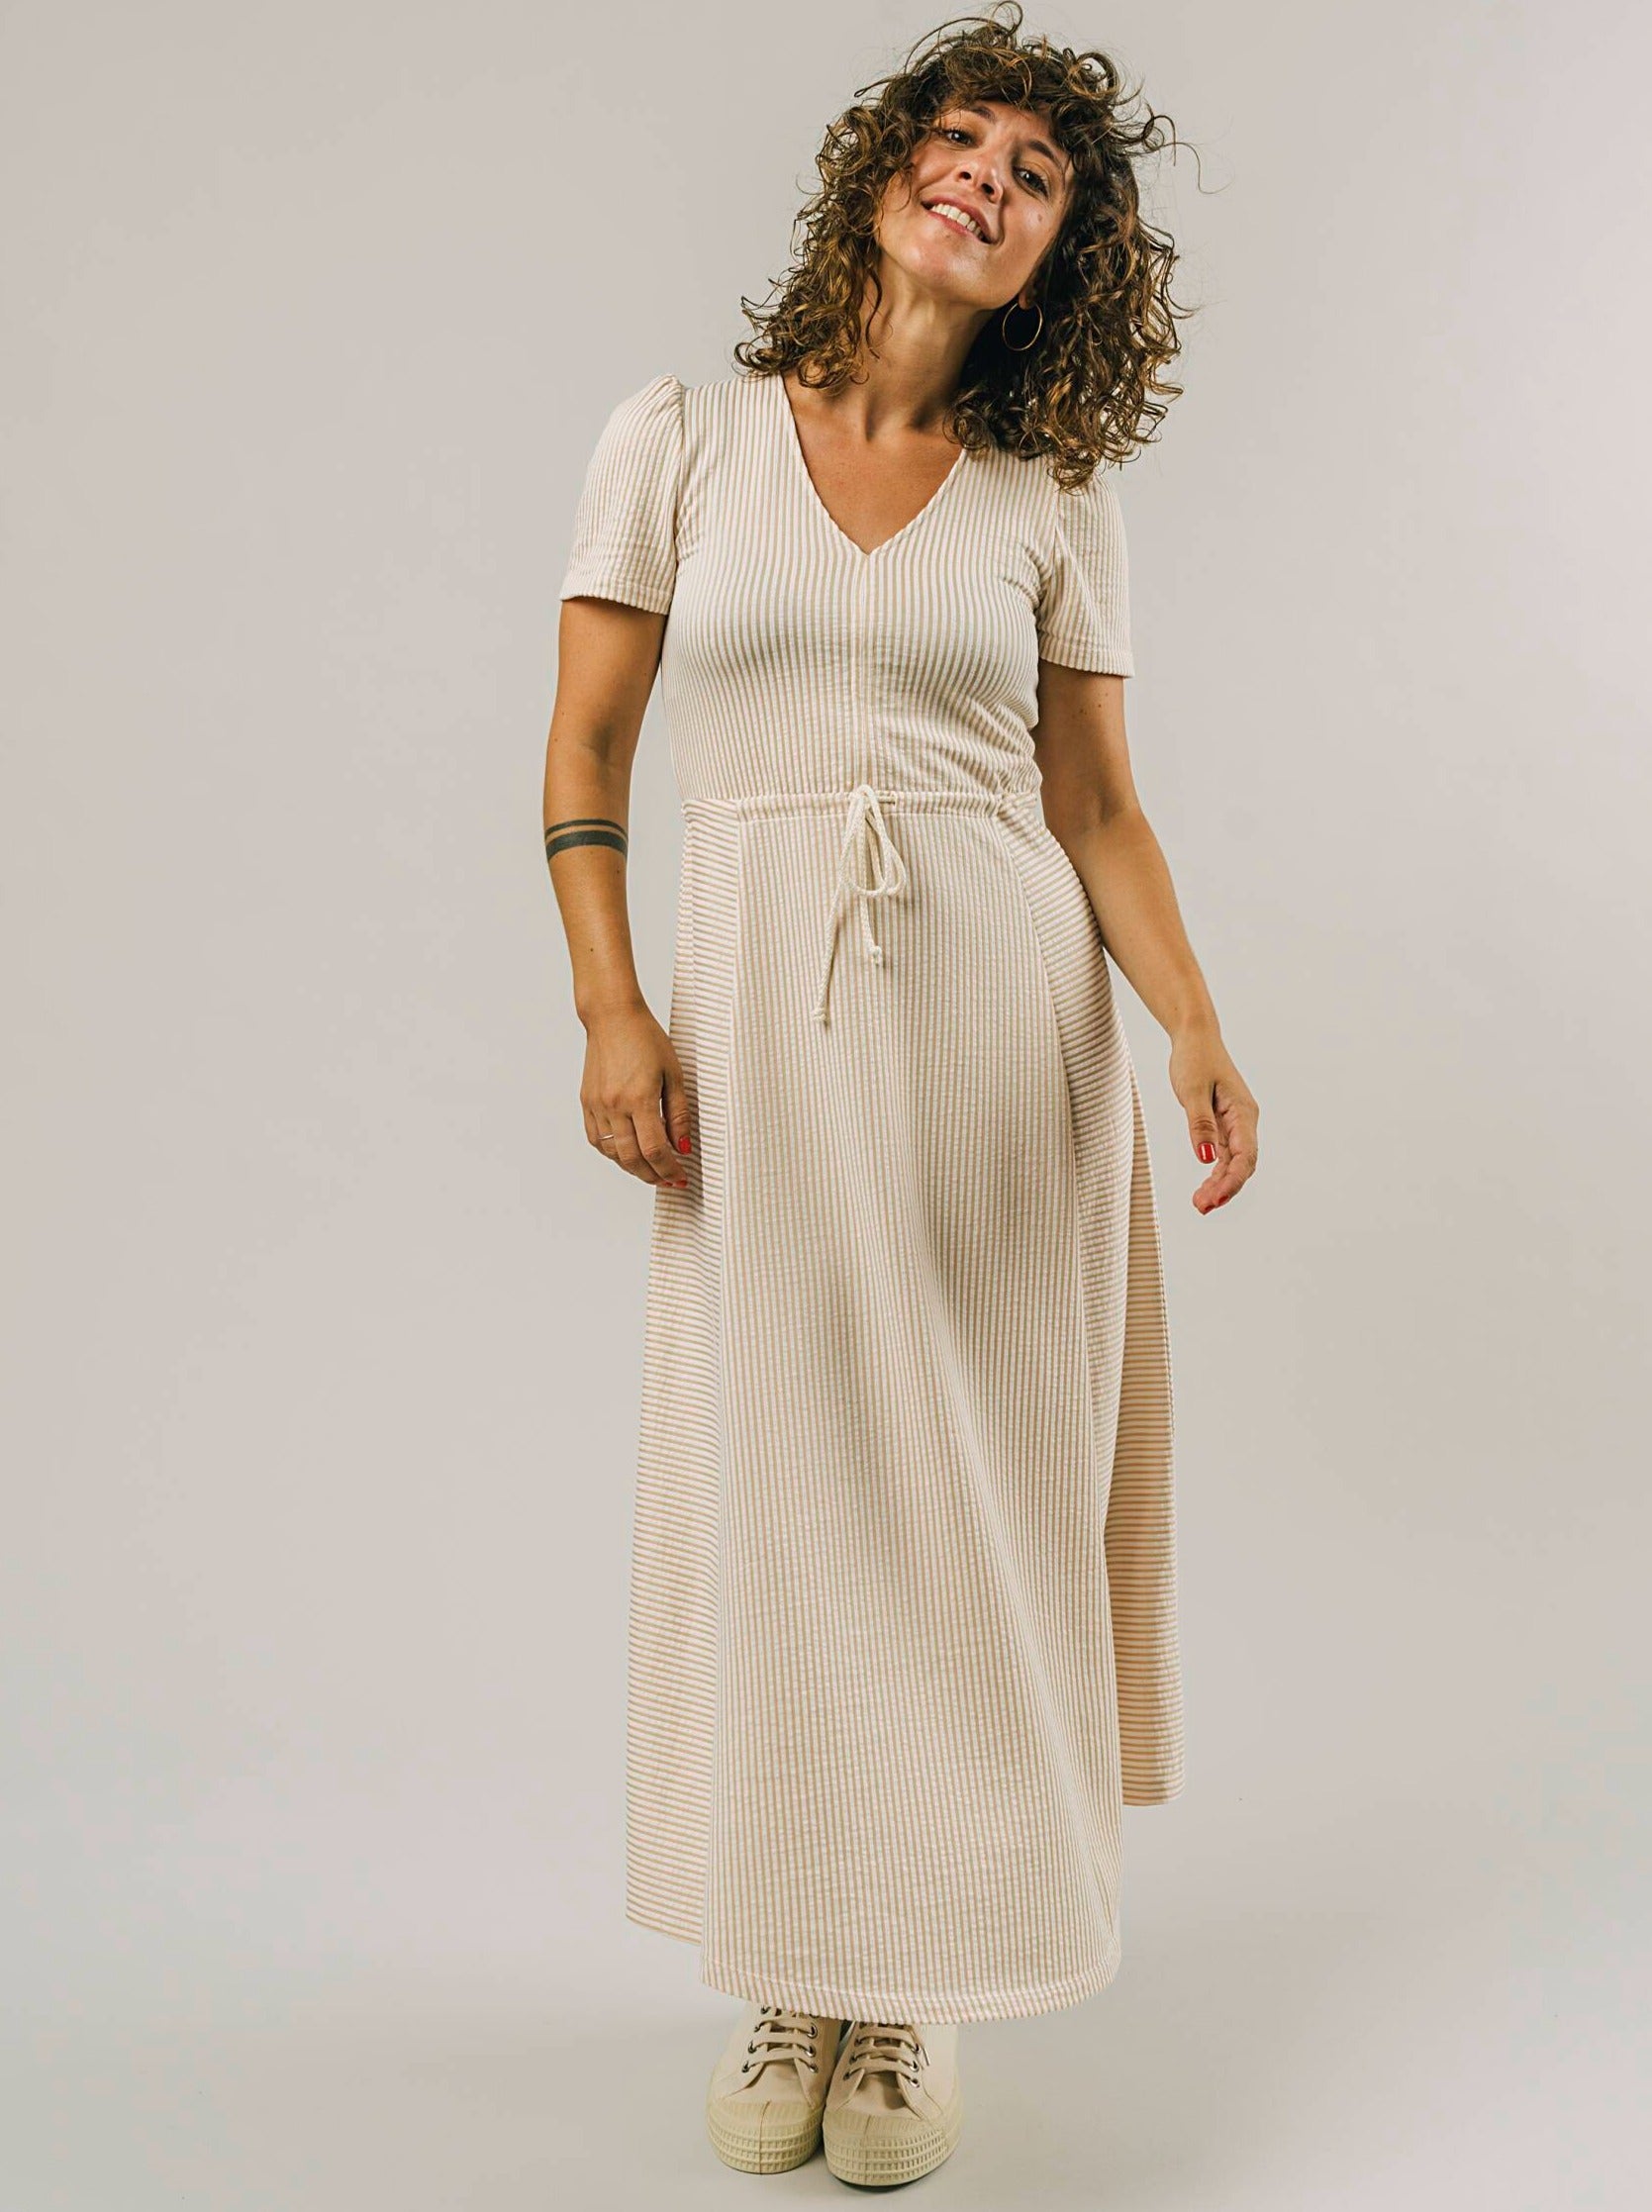 Brava Fabrics Vestits Sand Stripes Vestit moda sostenible moda ètica